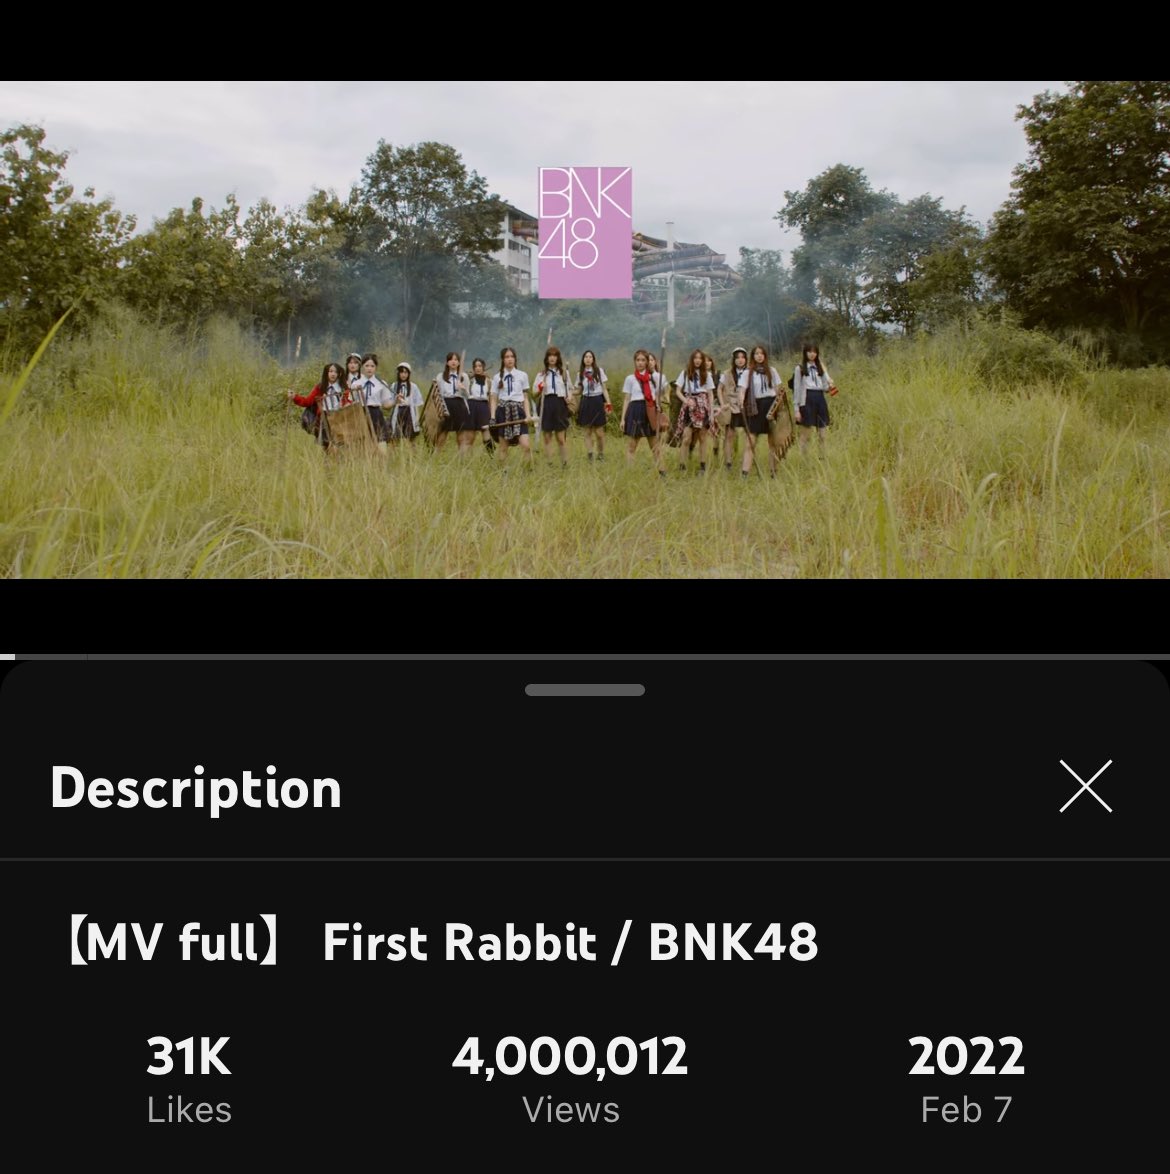 MV First Rabbit 4ล้านวิวแล้วววววววววววว😭😭😭😭🫶🏻🫶🏻🫶🏻🫶🏻🫶🏻 ยินดีกับเจ้ากระต่าย 18 ตัวด้วยนะ❤️🐇
#BNK483rdGeneration #BNK48 #FirstRa3bitTH